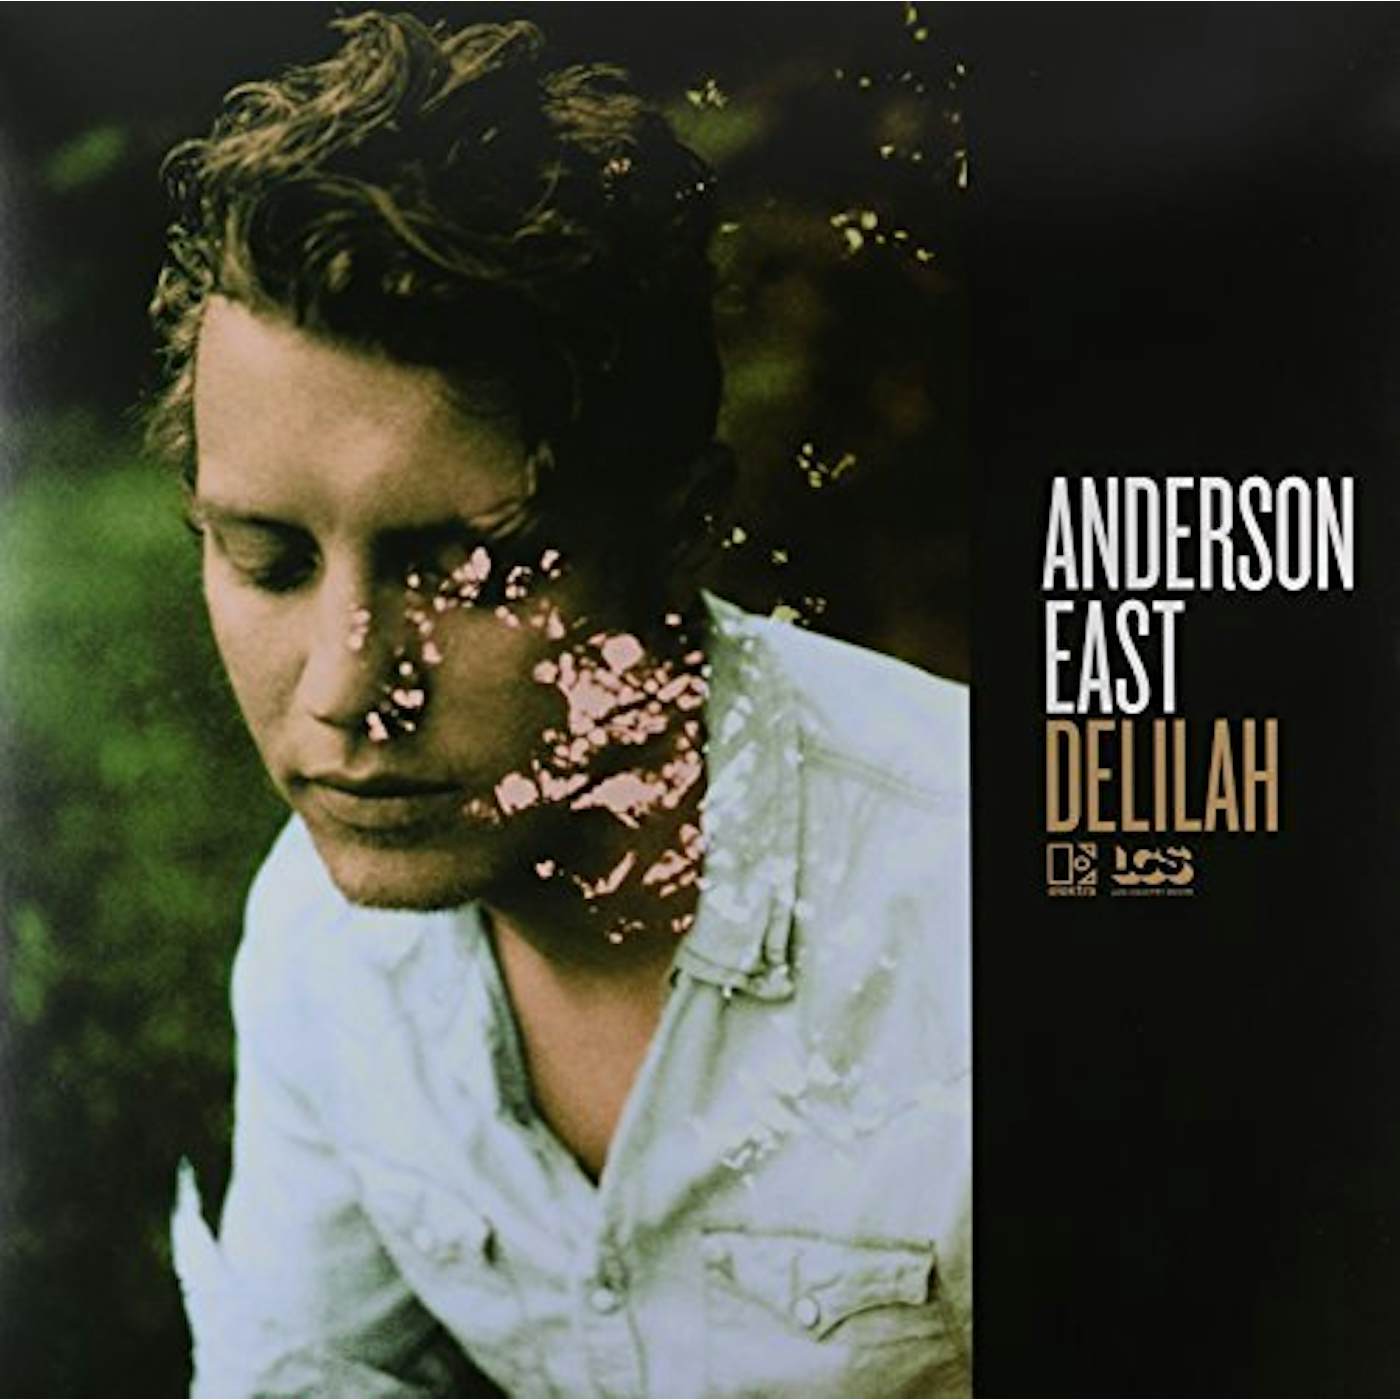 Anderson East Delilah Vinyl Record